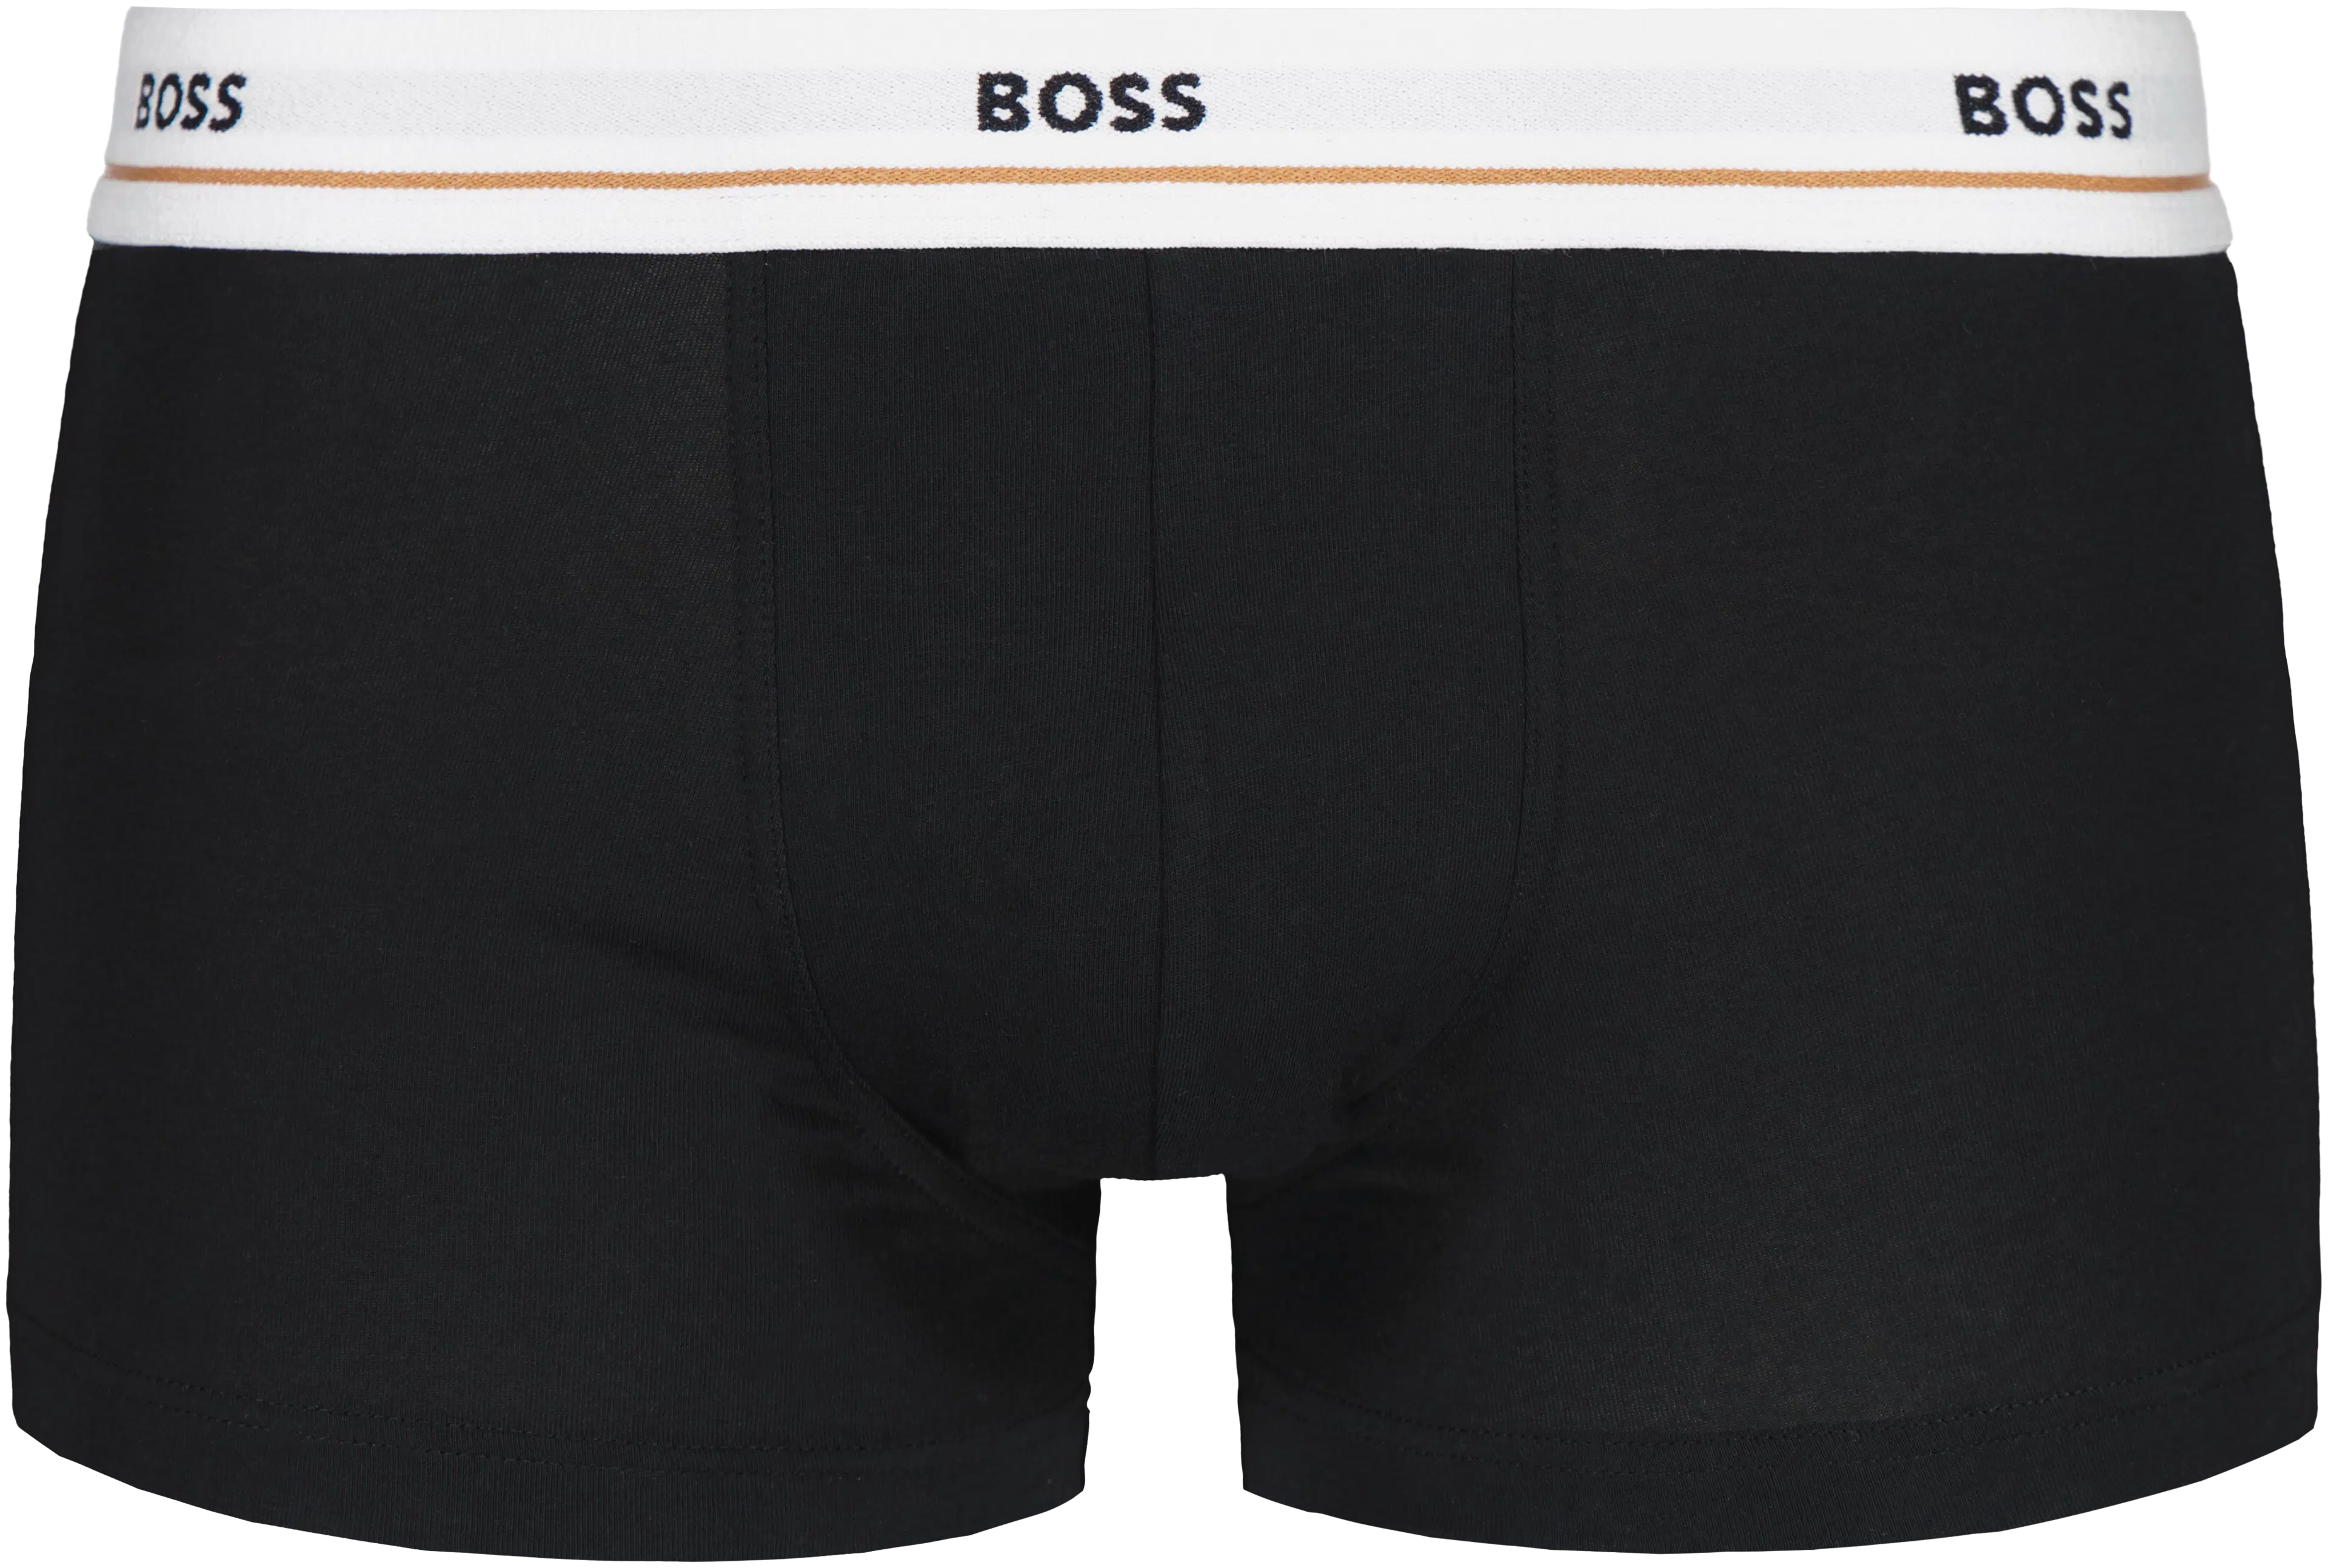 Boss Trunk 5P Essential alushousut